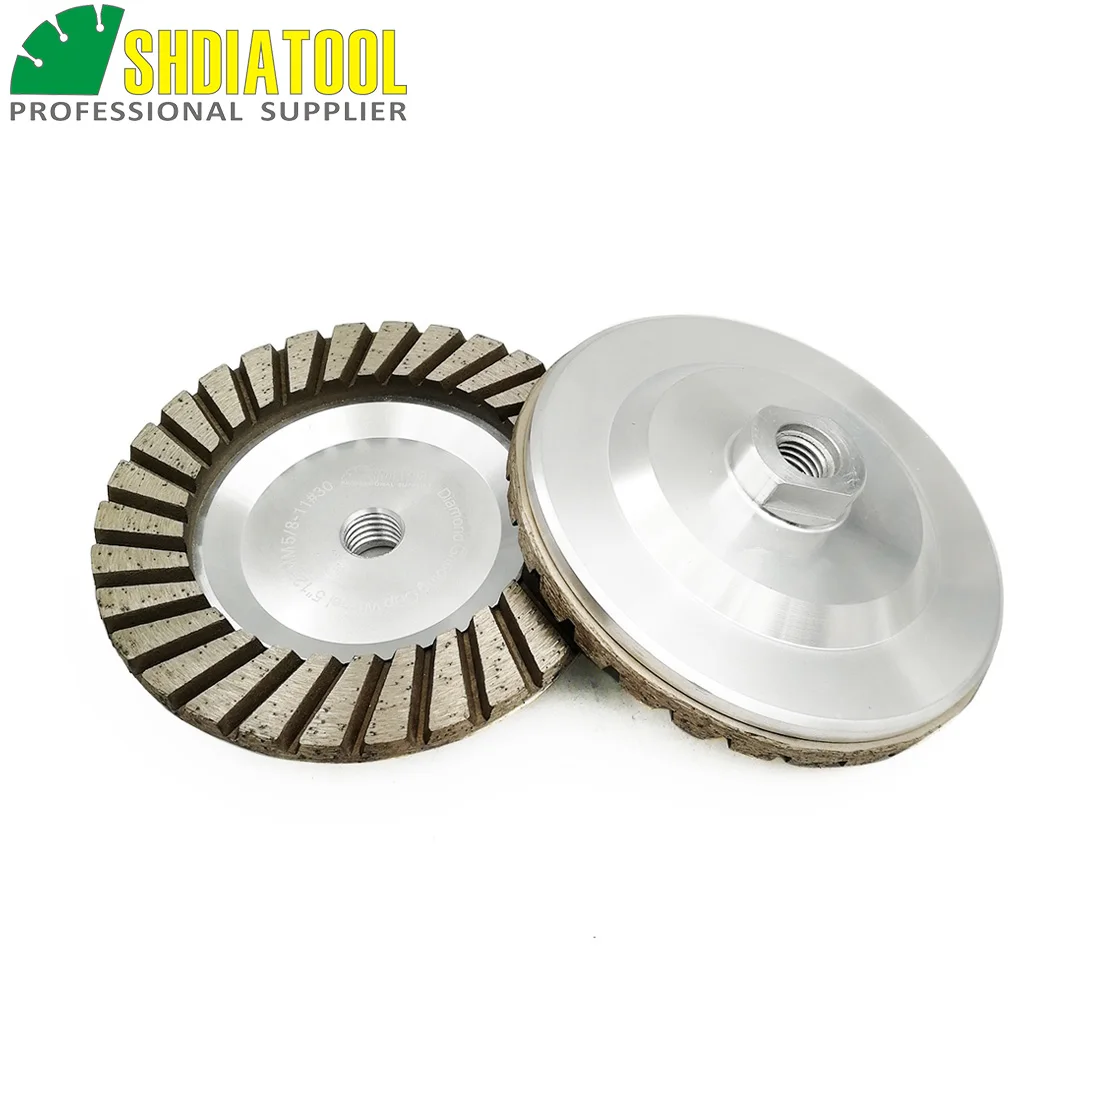 

SHDIATOOL 2PK 5inch #30 Aluminum Based Diamond Grinding Cup Wheel 5/8-11 thread Diameter 125mm Grinding Wheel For Granite